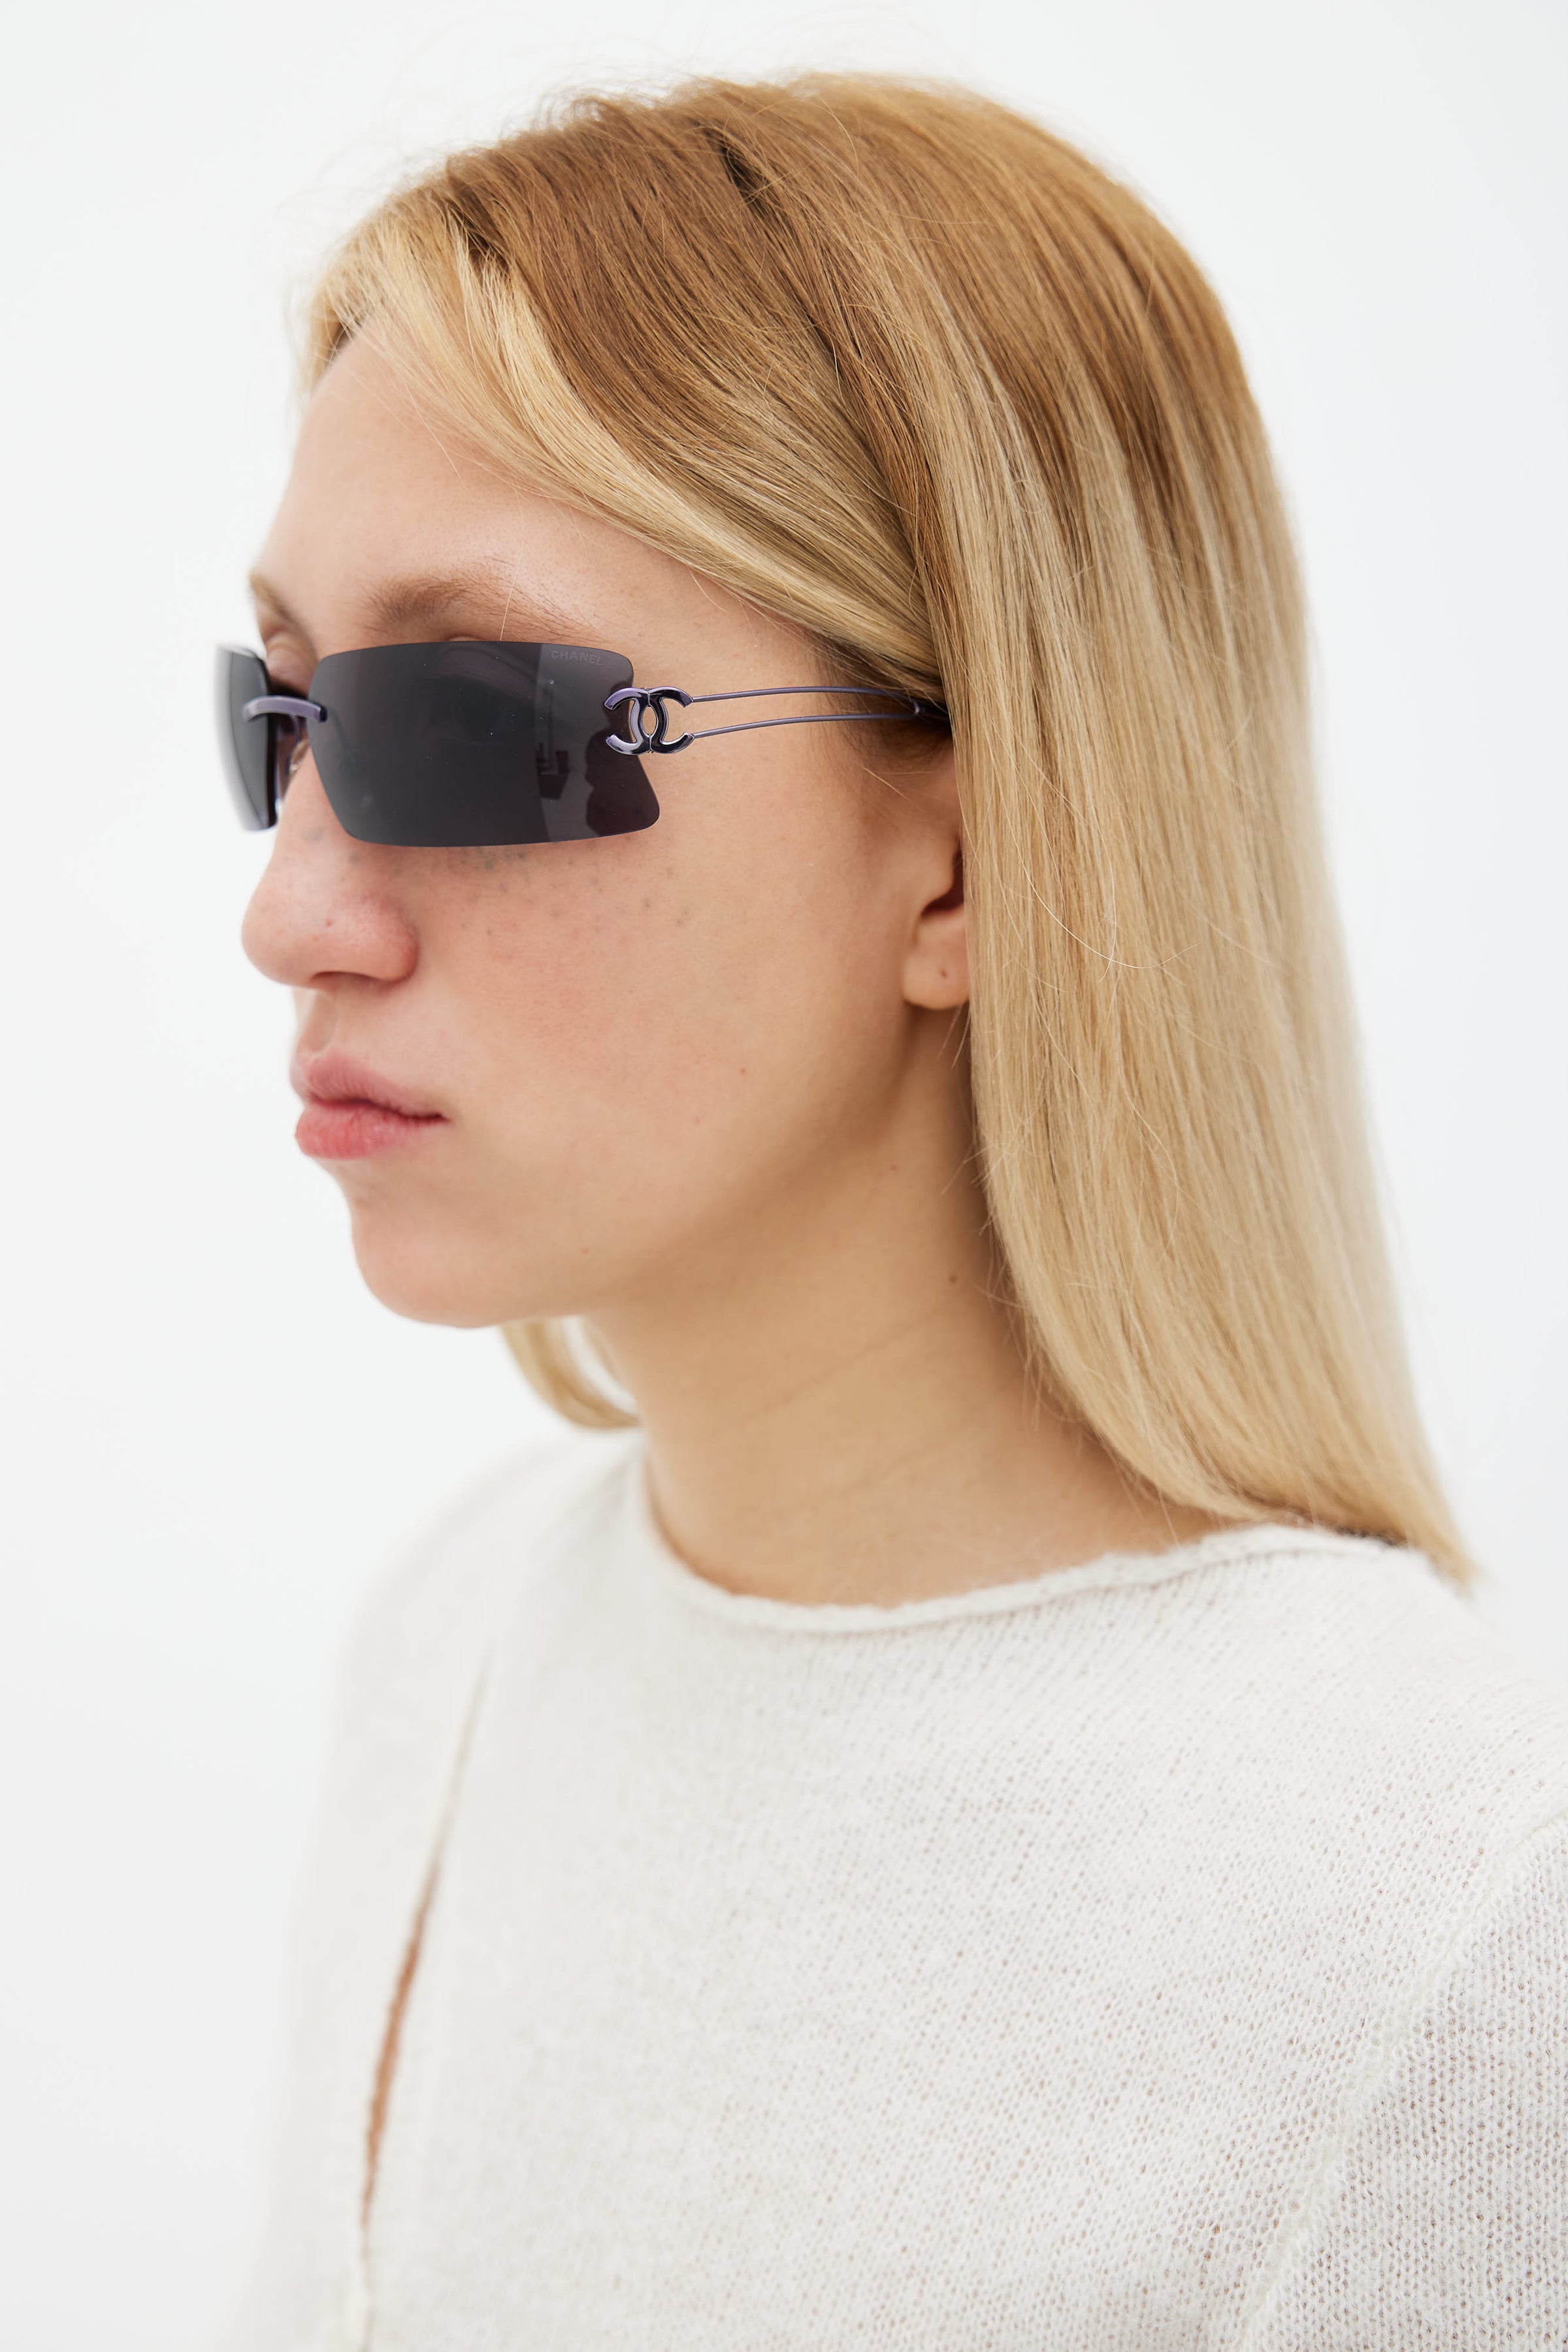 Chanel // Silver & Grey Rimless C180/88 Sunglasses – VSP Consignment